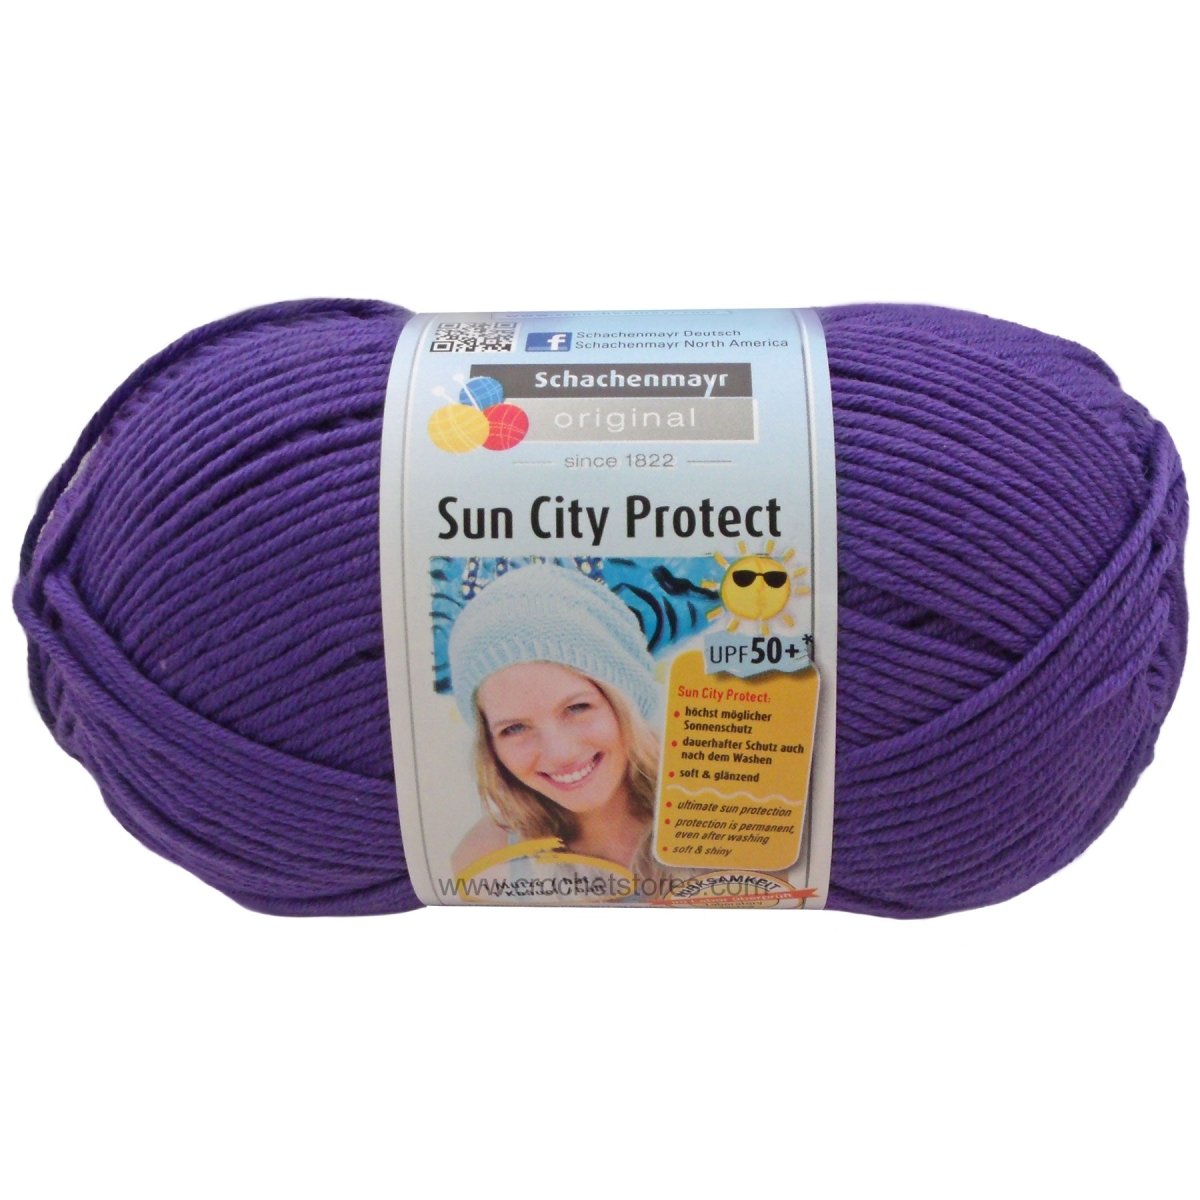 SUN CITY PROTECT - Crochetstores9807778-4494053859018883